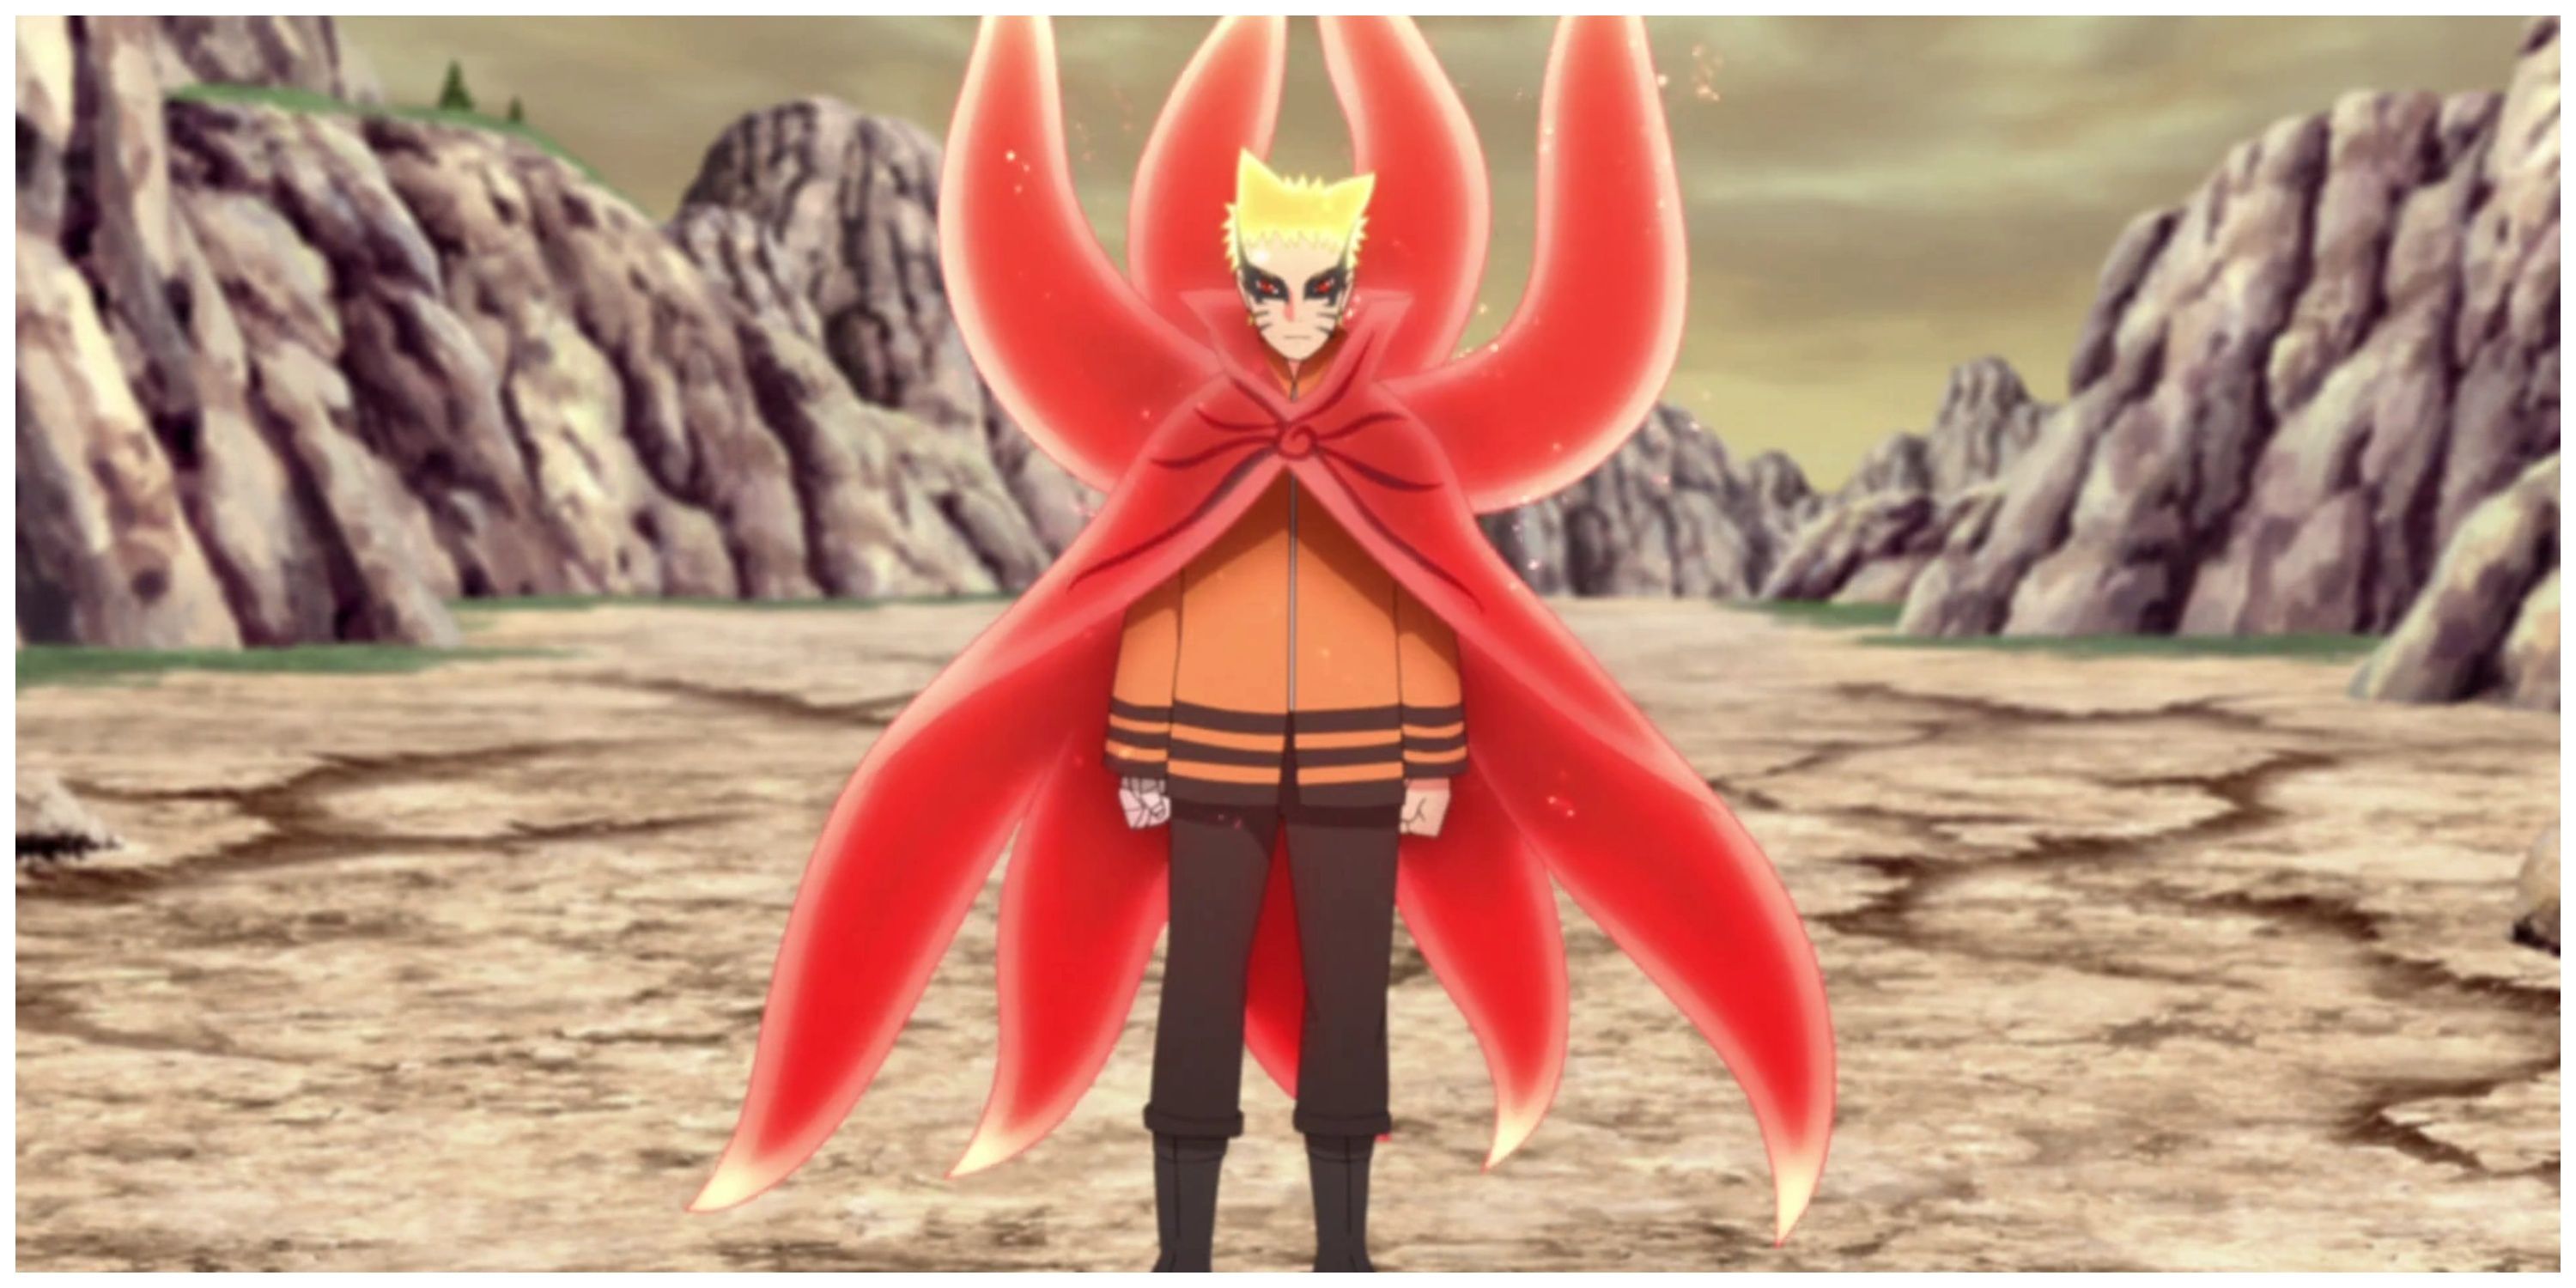 Naruto using his Baryon Mode in a desolate landscape